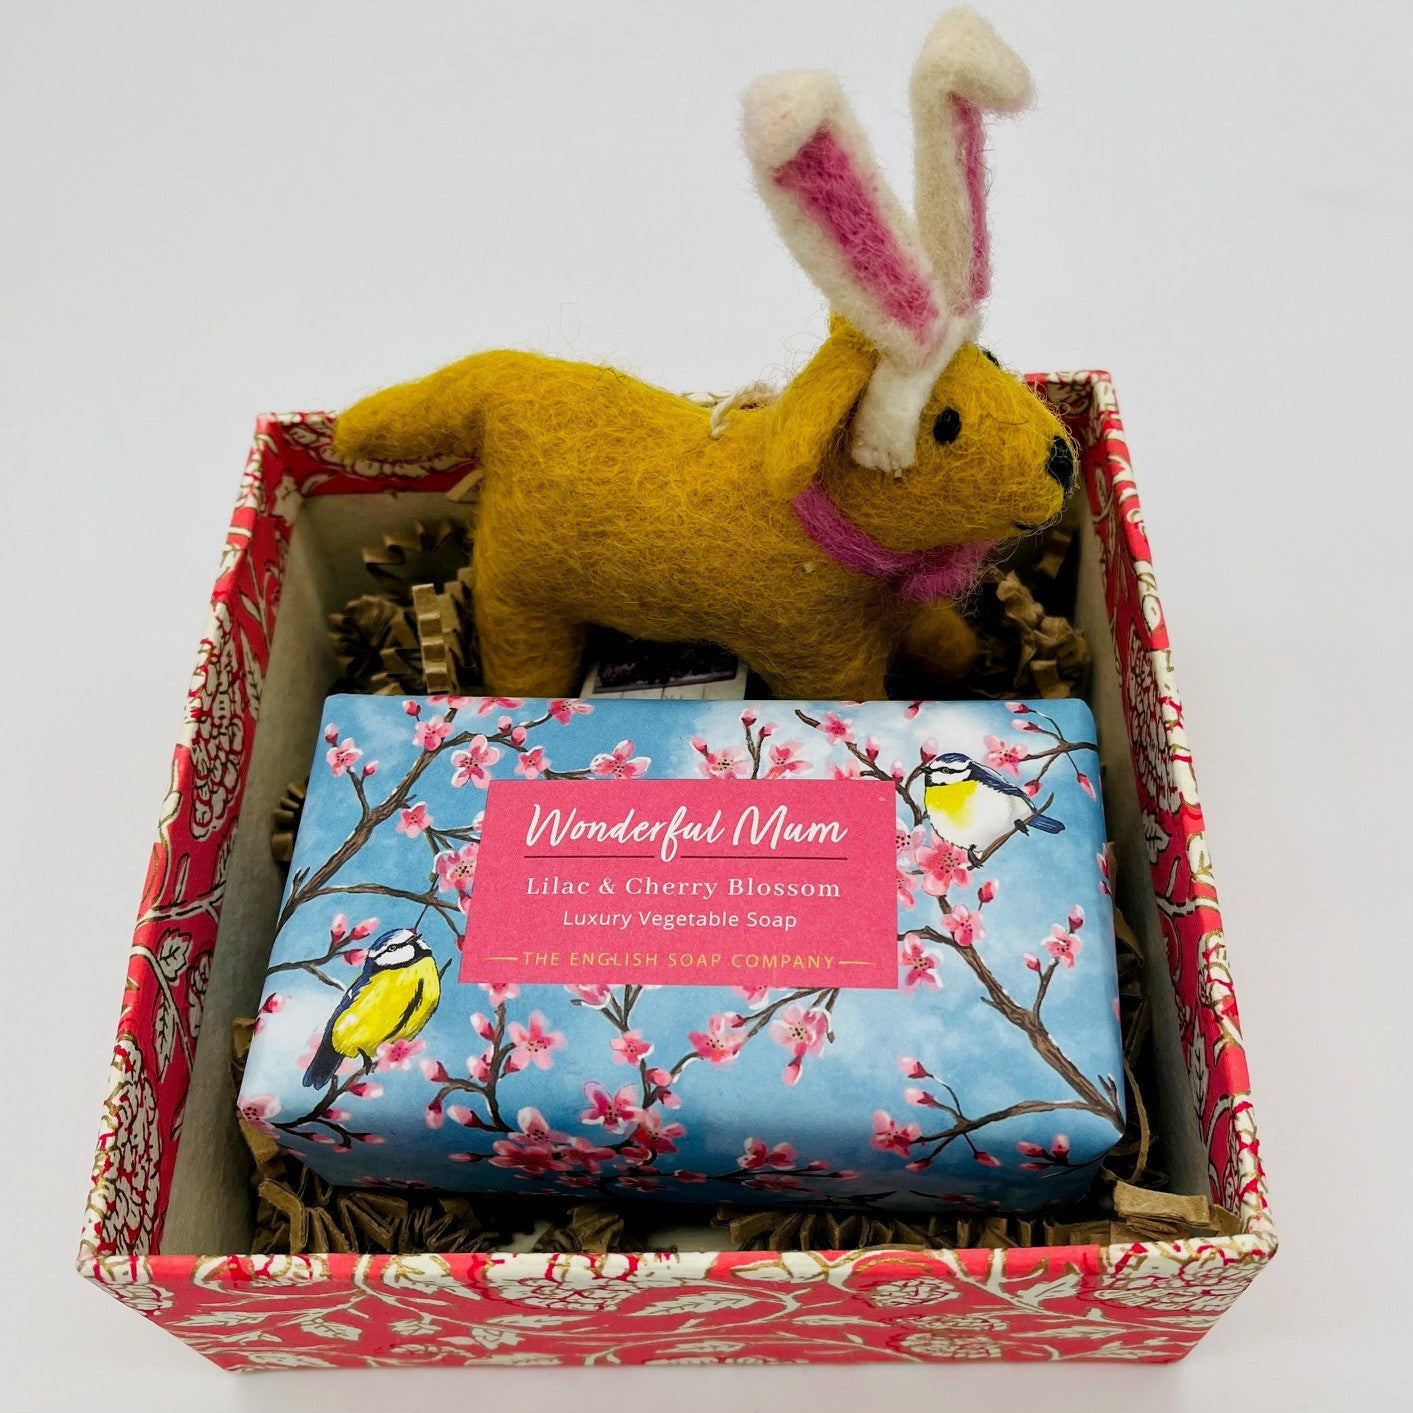 'Wonderful Mum' Mother's Day Gift Box